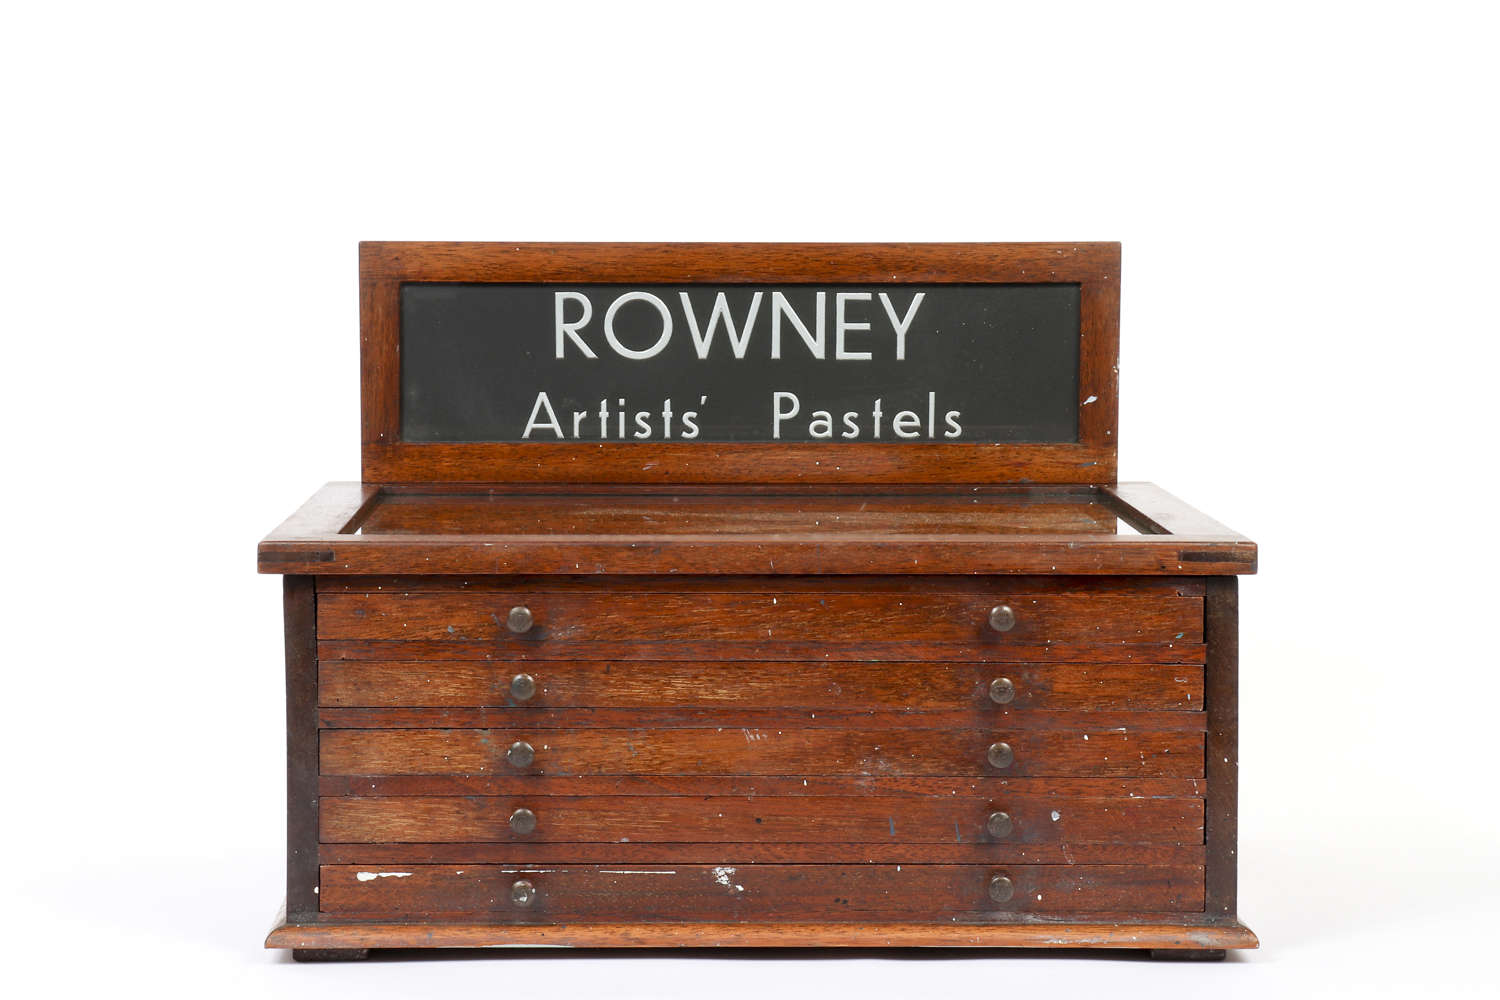 Rowney Artists' Pastels shop display cabinet